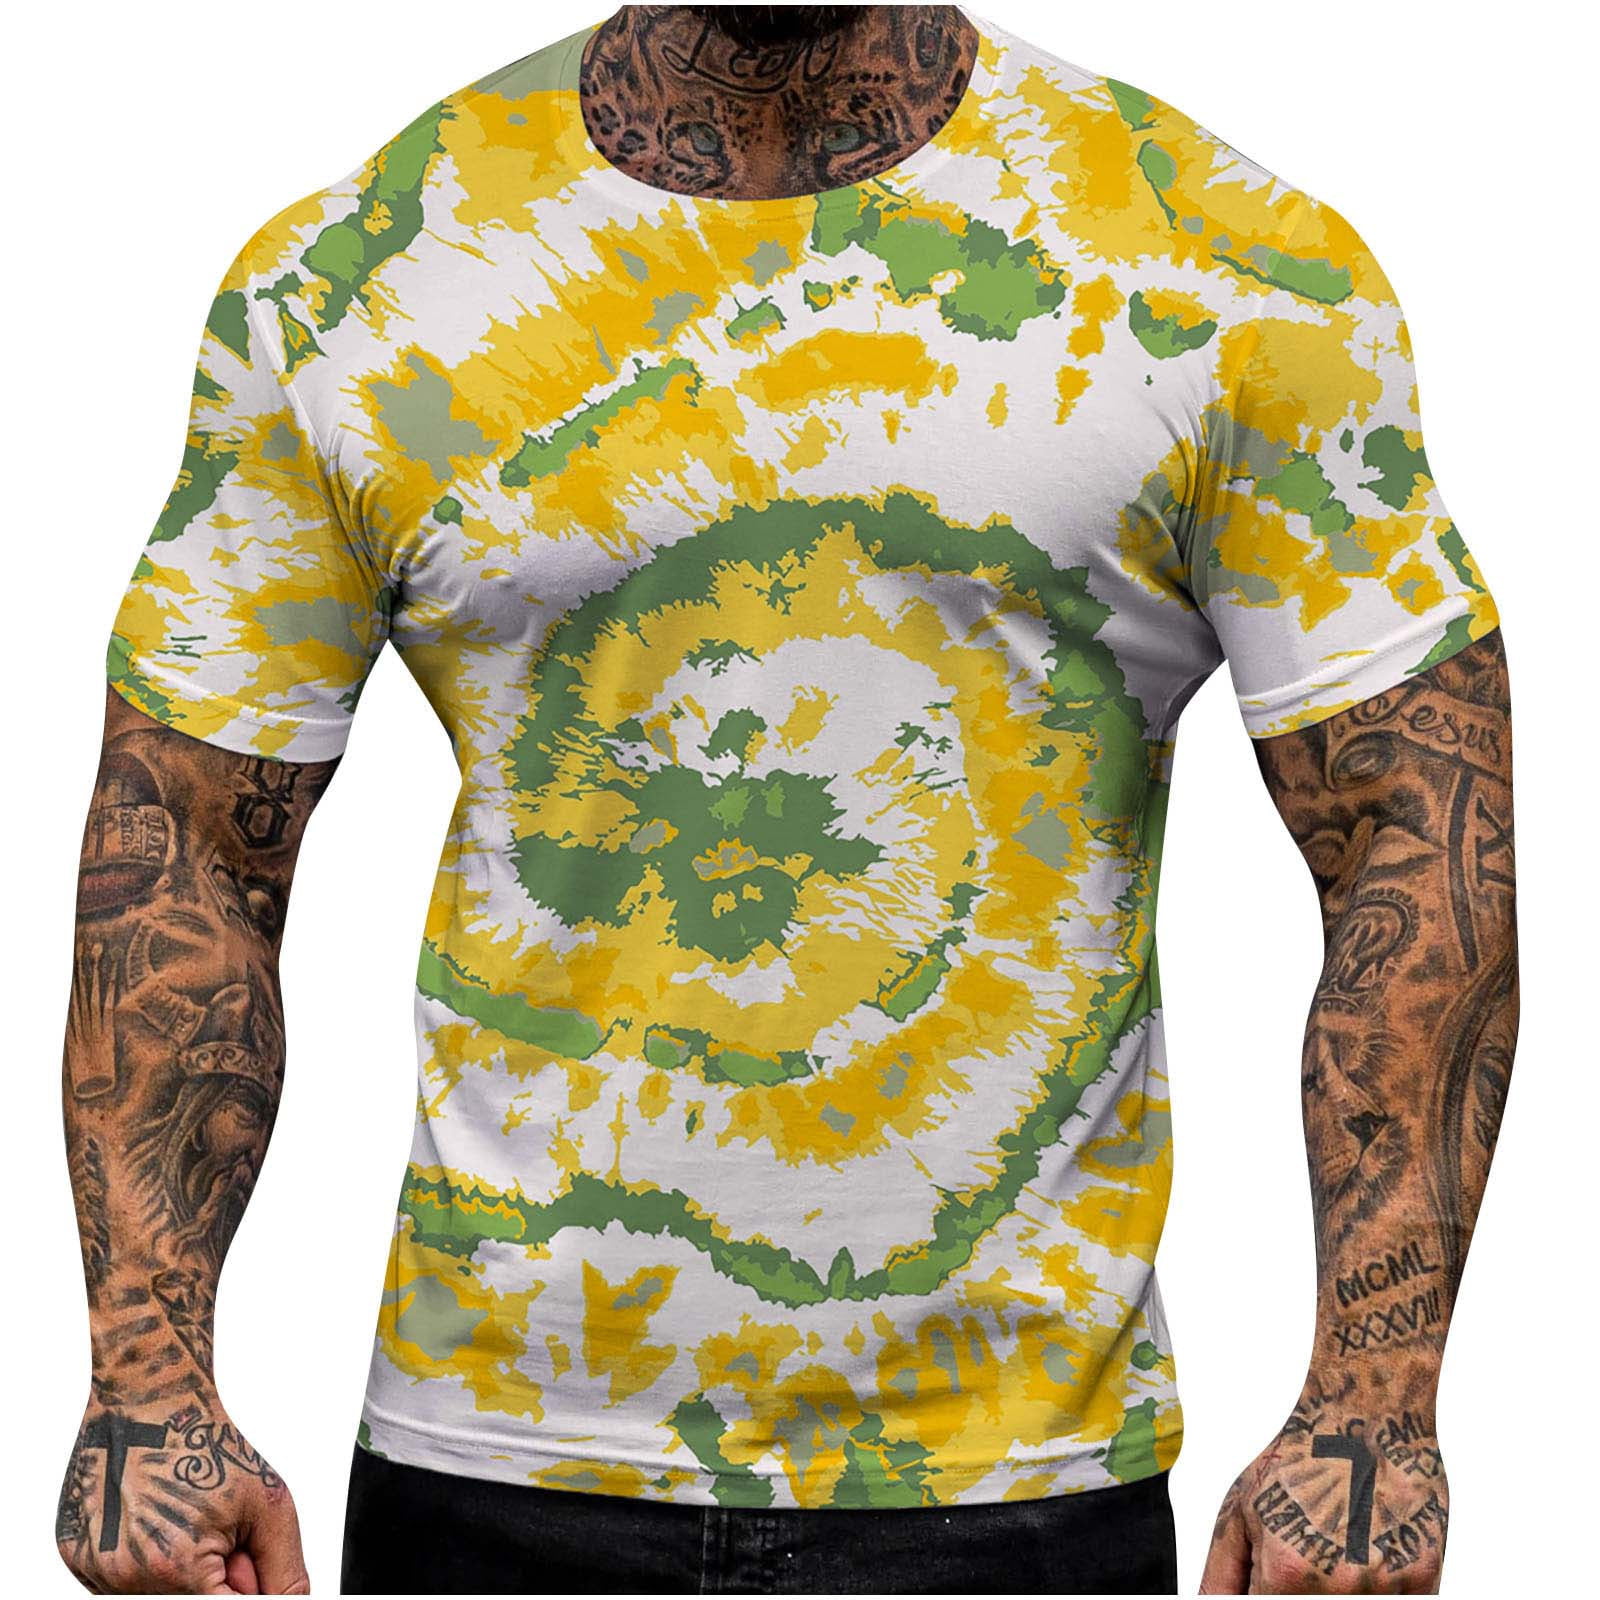 VSSSJ Digital Tie Dye Printed Shirt for Men Plus Size Fashion